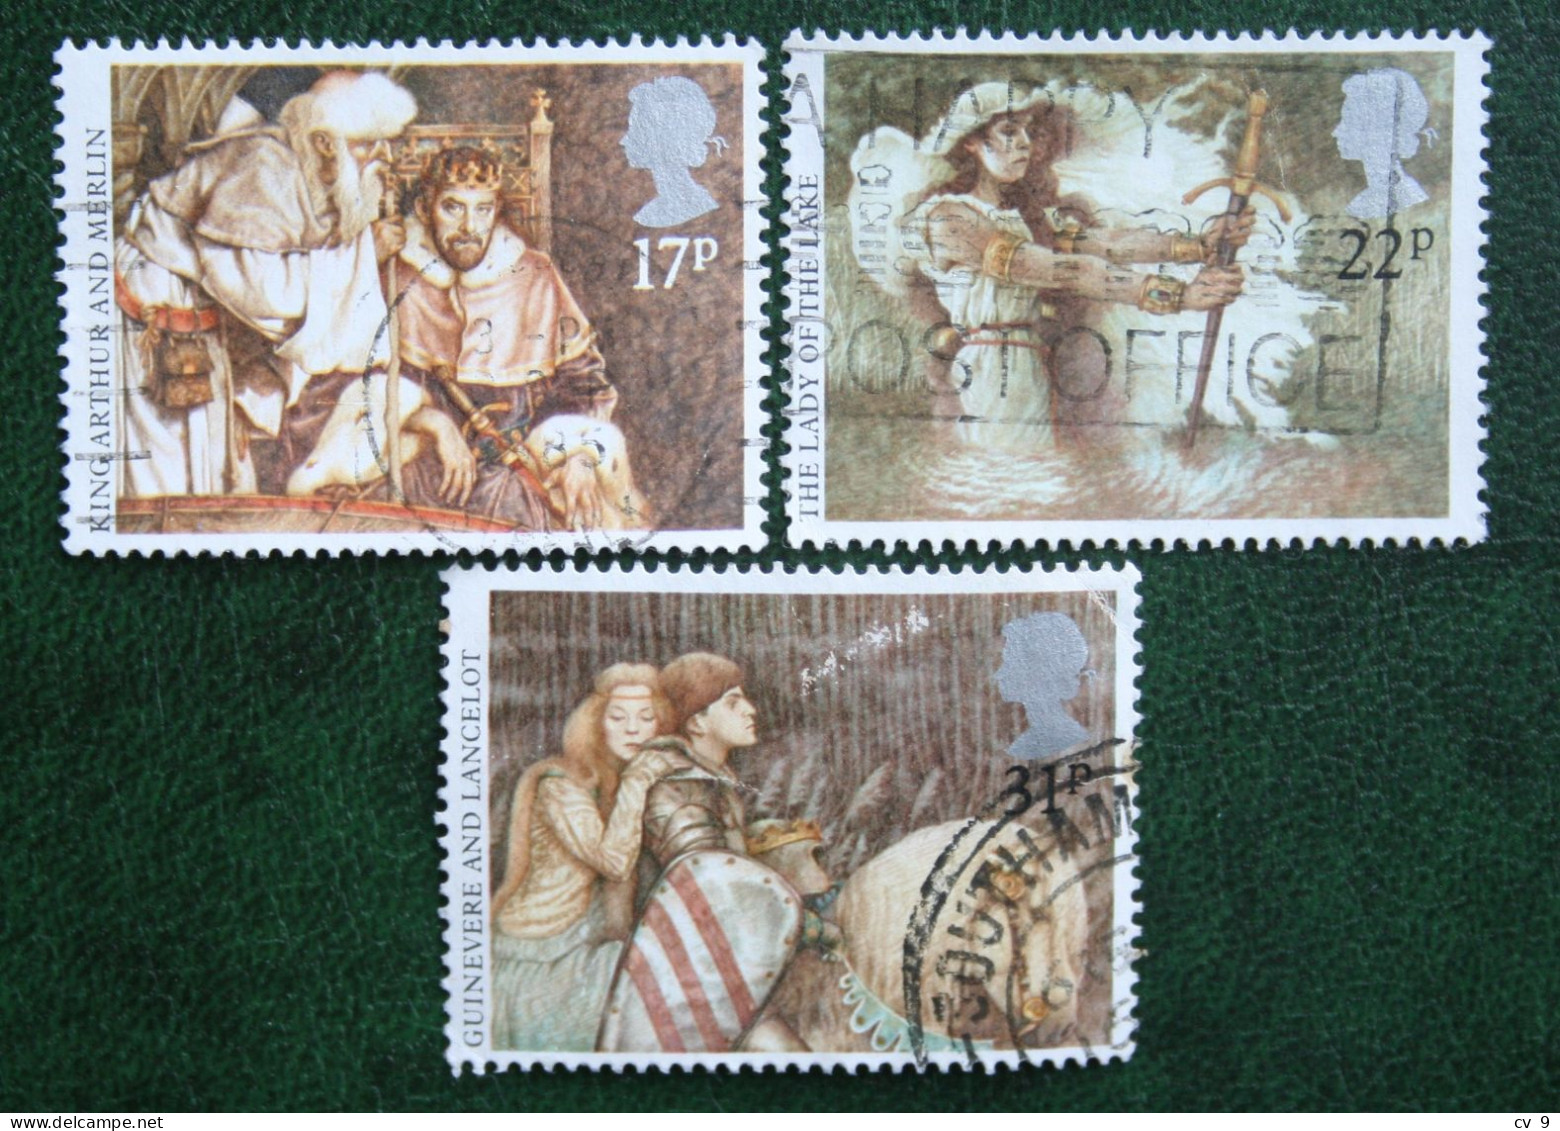 ARTHURIAN LEGENDS (Mi 1039-1041) 1985 Used Gebruikt Oblitere ENGLAND GRANDE-BRETAGNE GB GREAT BRITAIN - Used Stamps